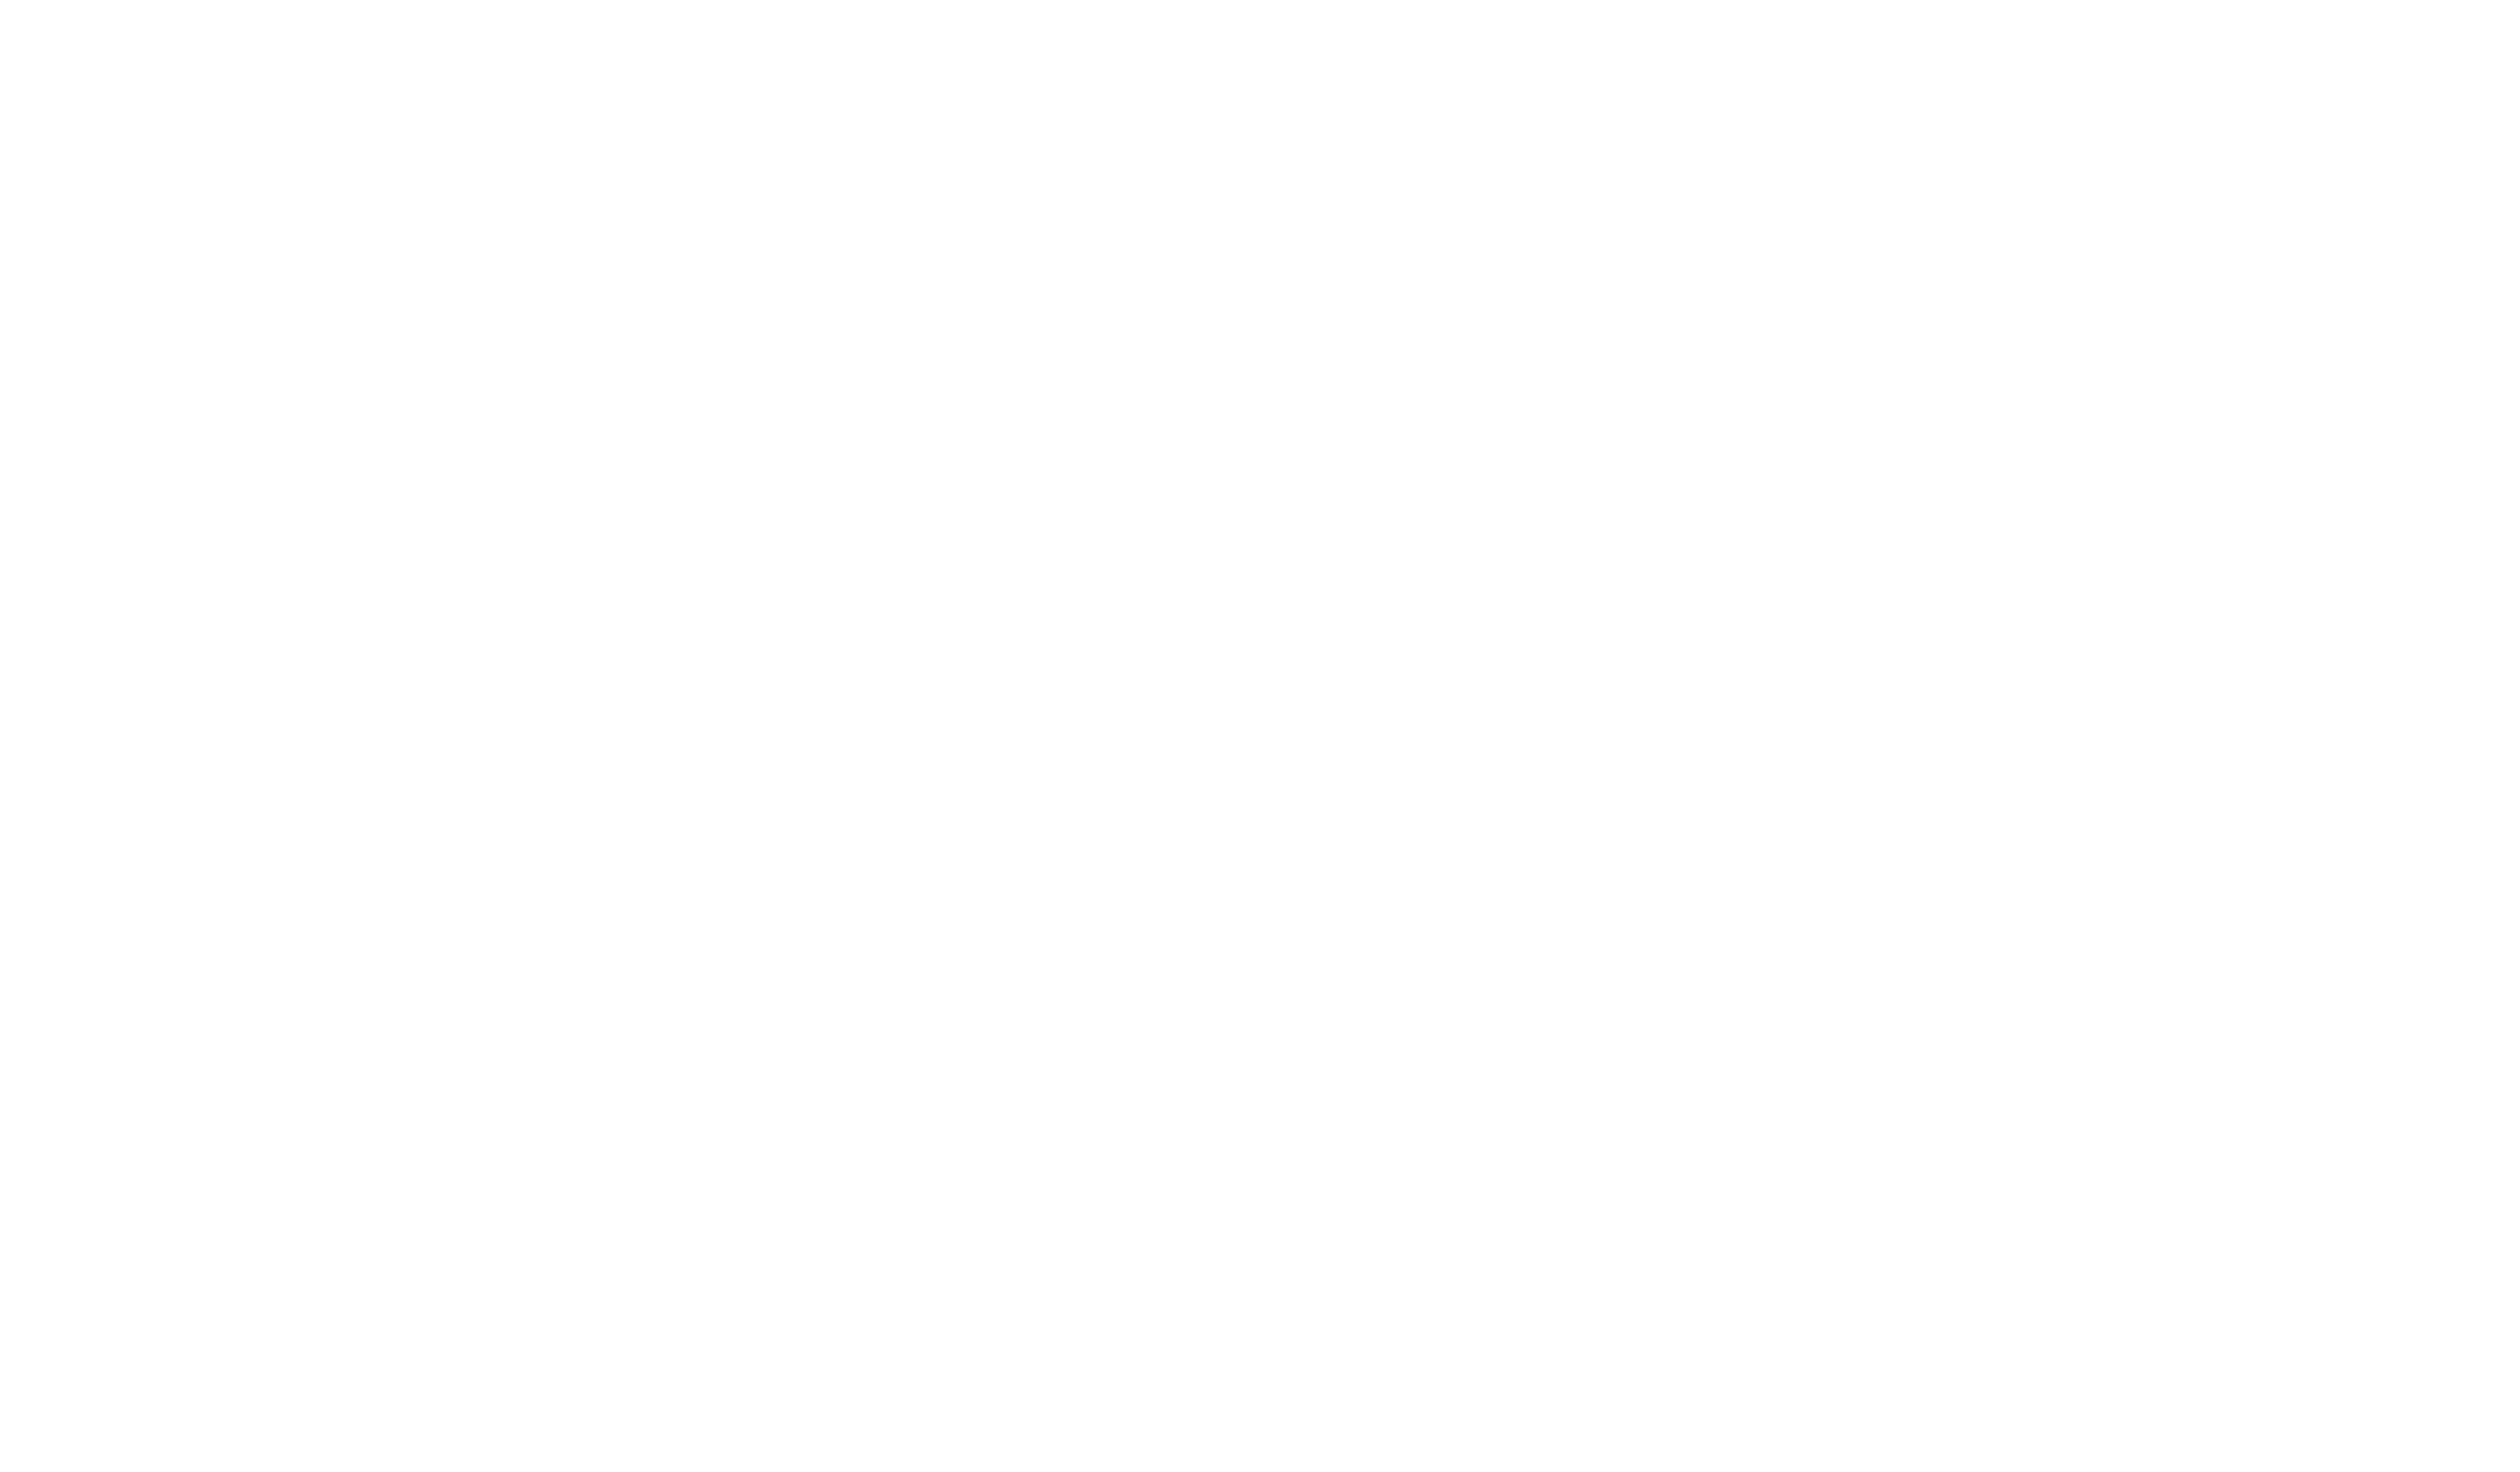 RPM Payroll